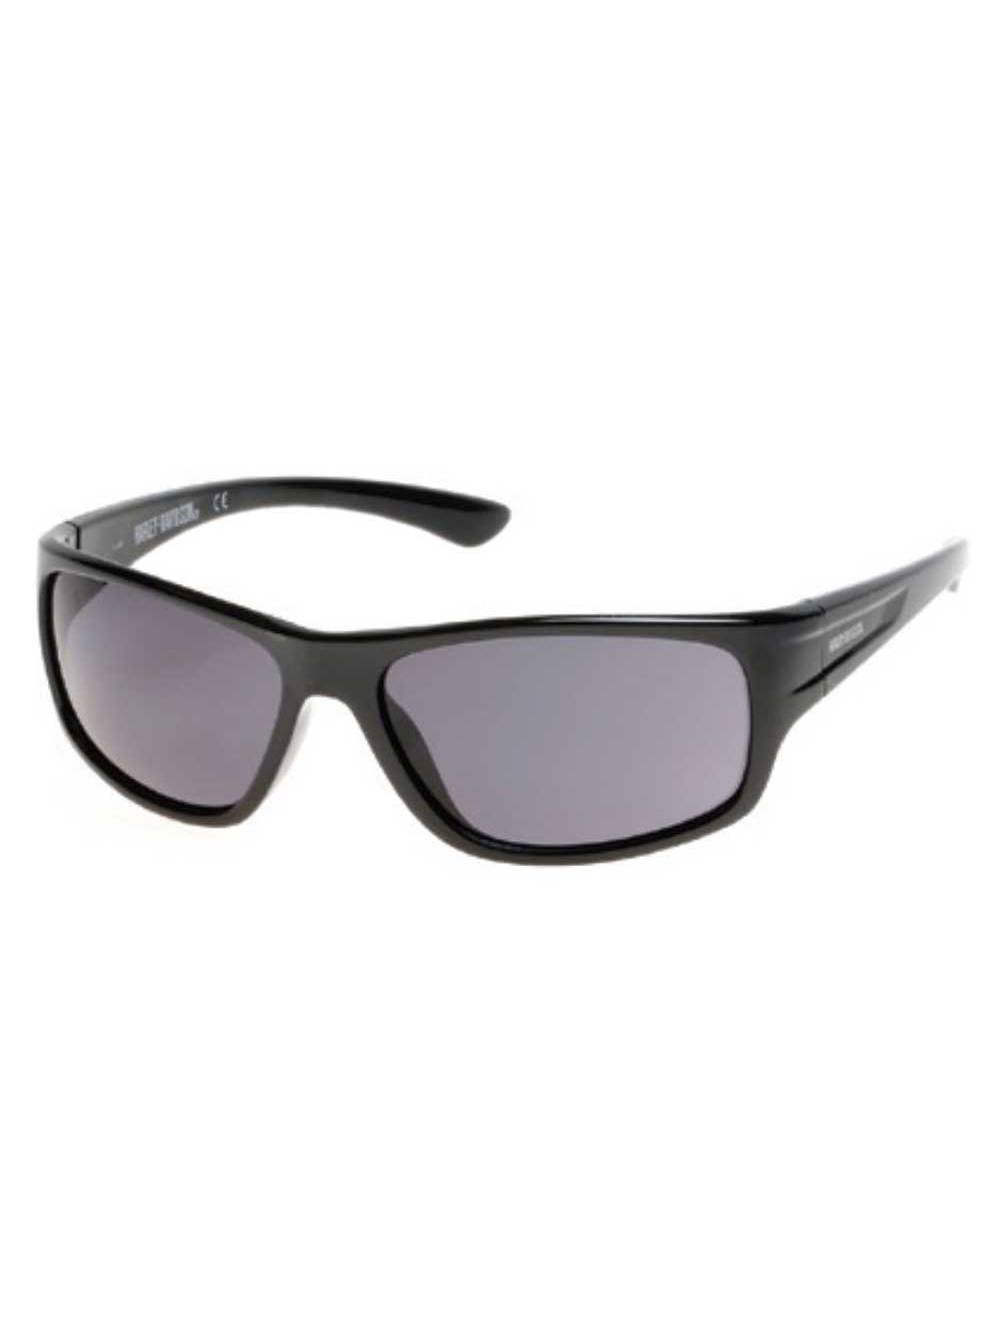 Black Frame & Smoke Gray Lens Harley-Davidson Men's Plastic Wrap H-D Sunglasses 